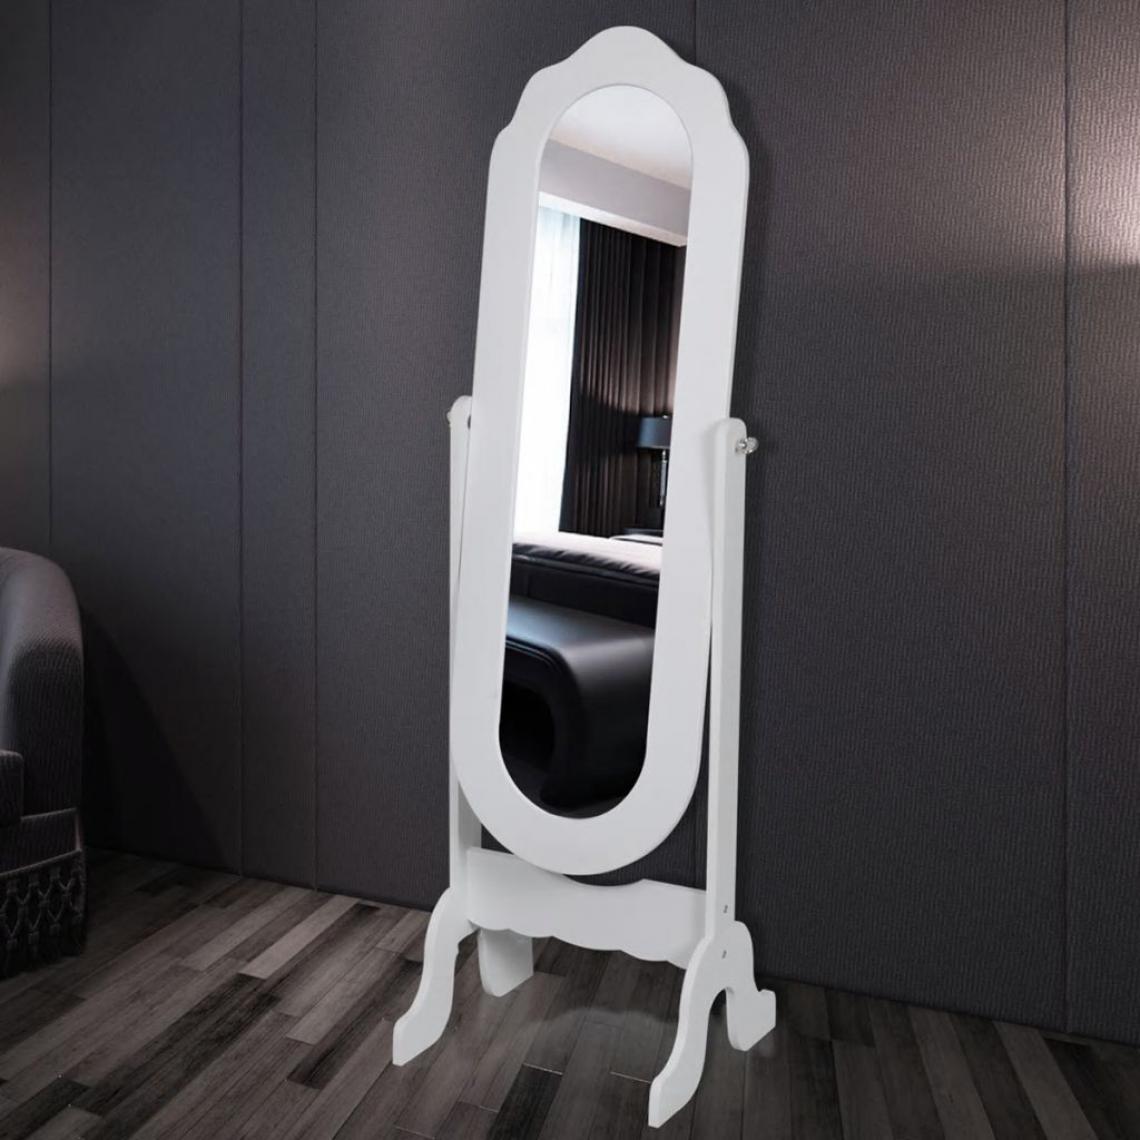 Chunhelife - Miroir sur pied réglable Blanc - Miroir de salle de bain